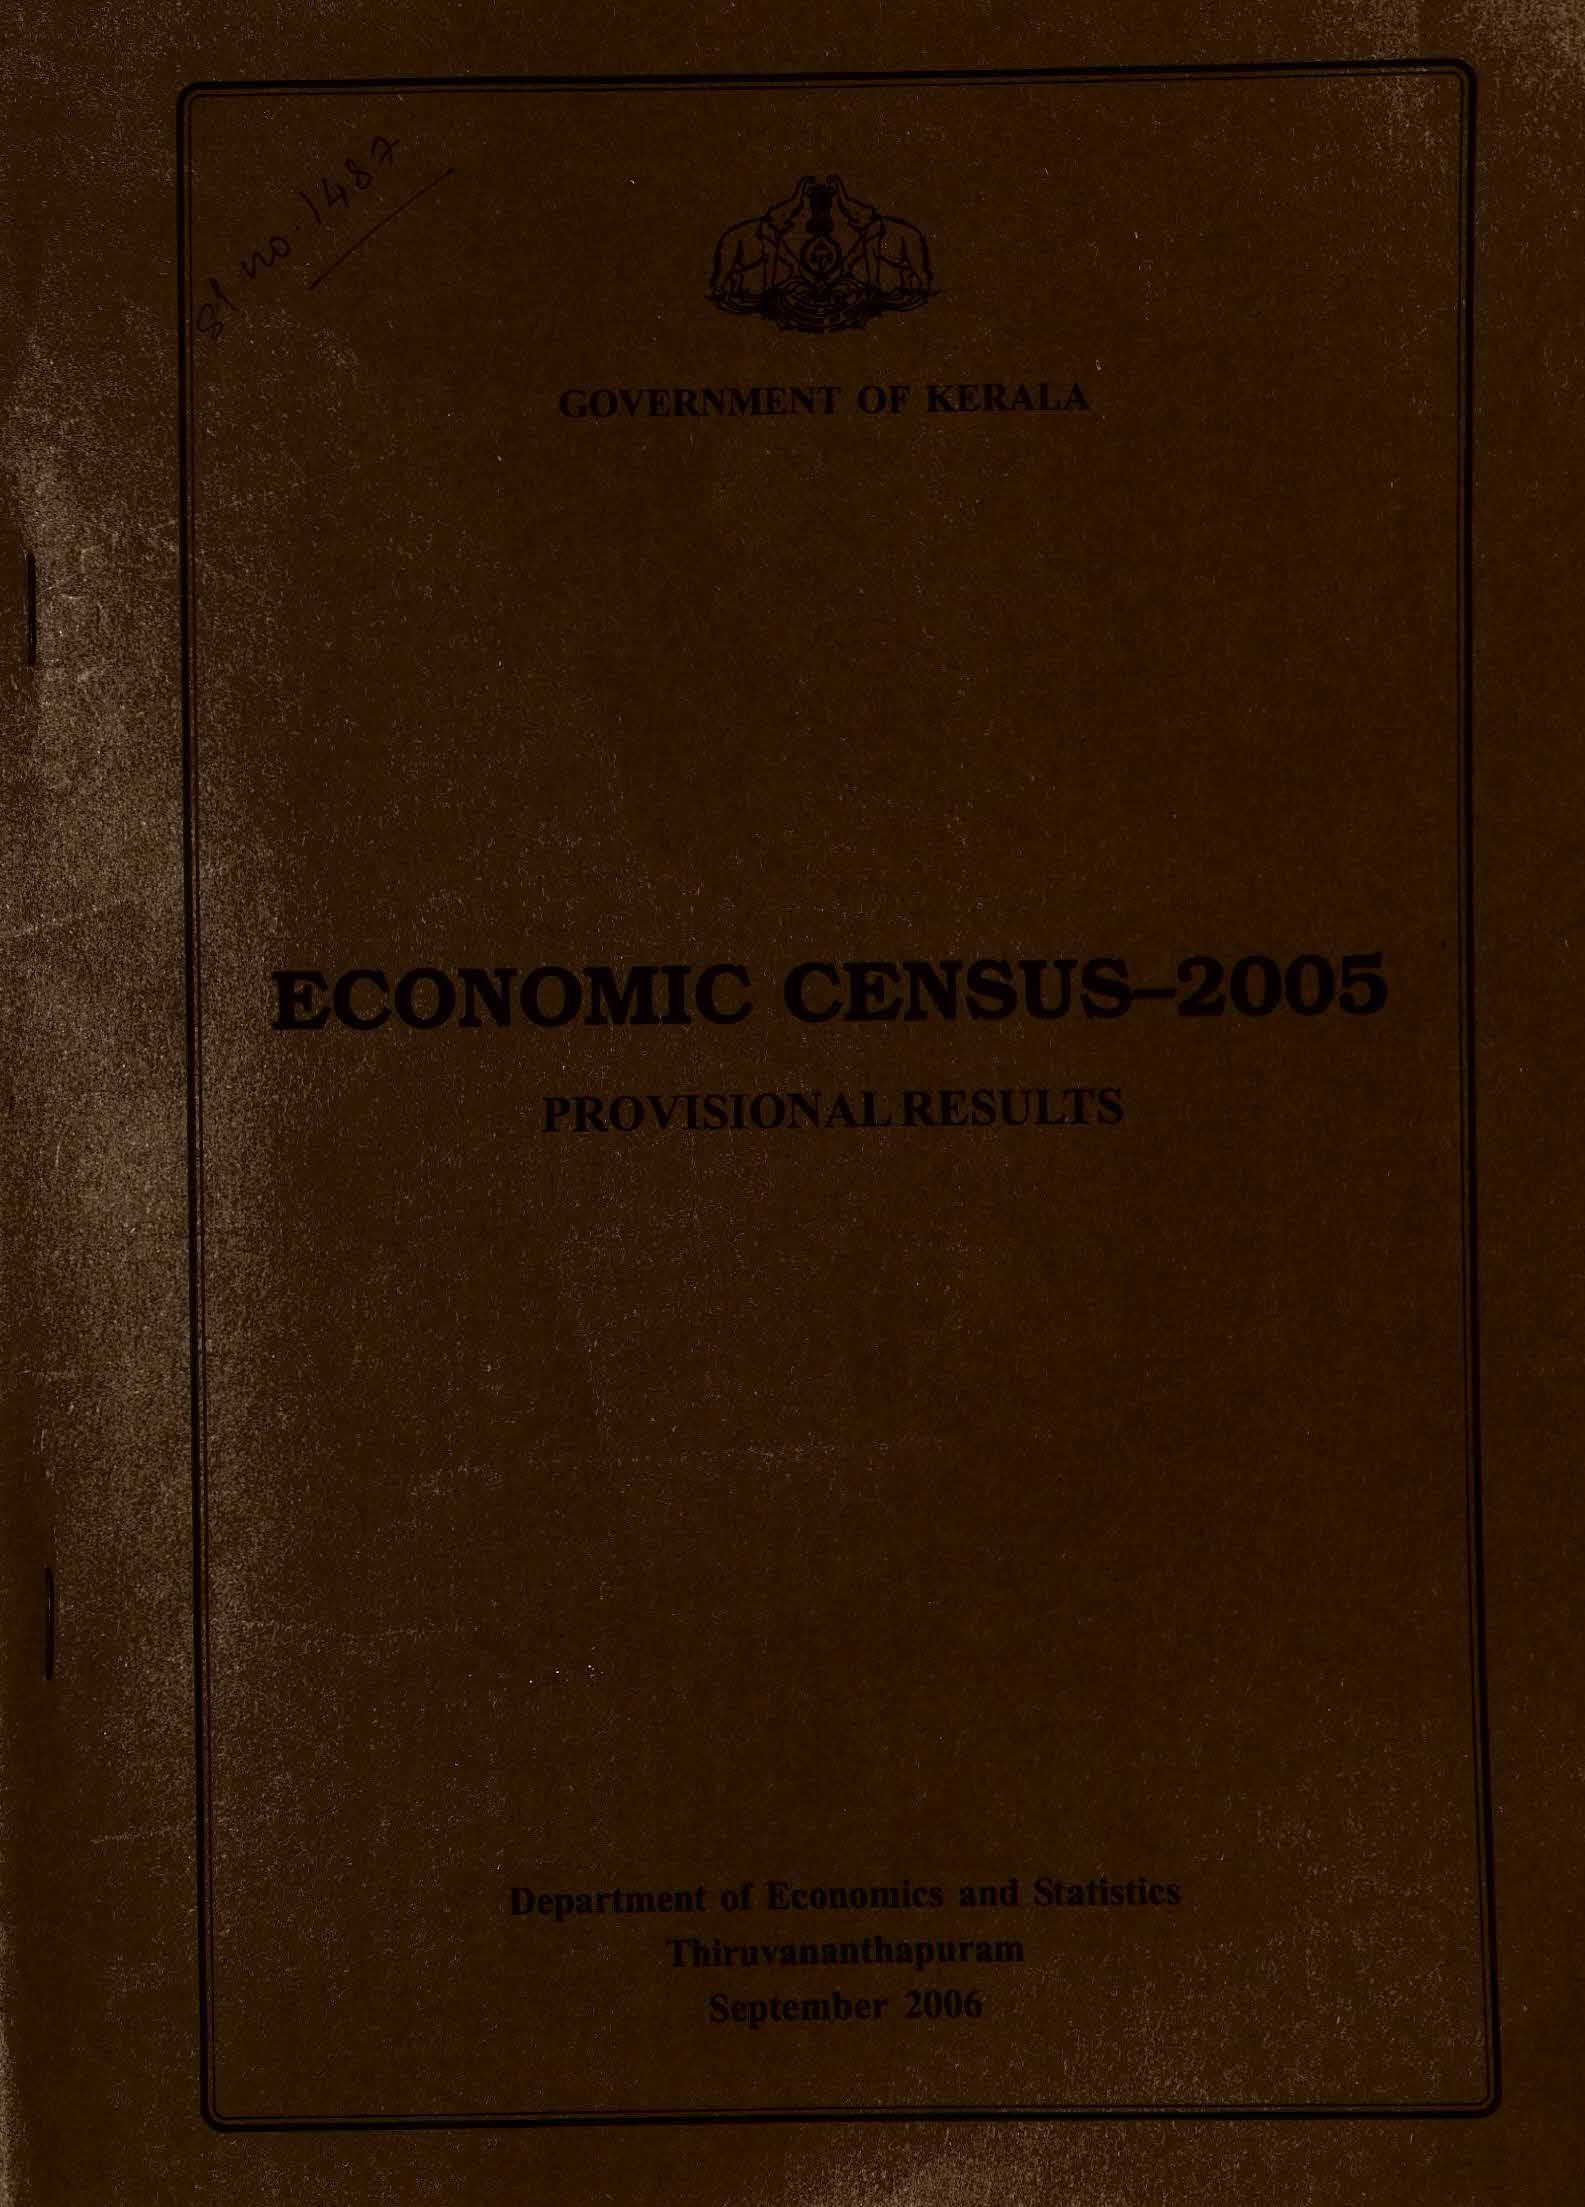 Economic Census 2005 provisional results